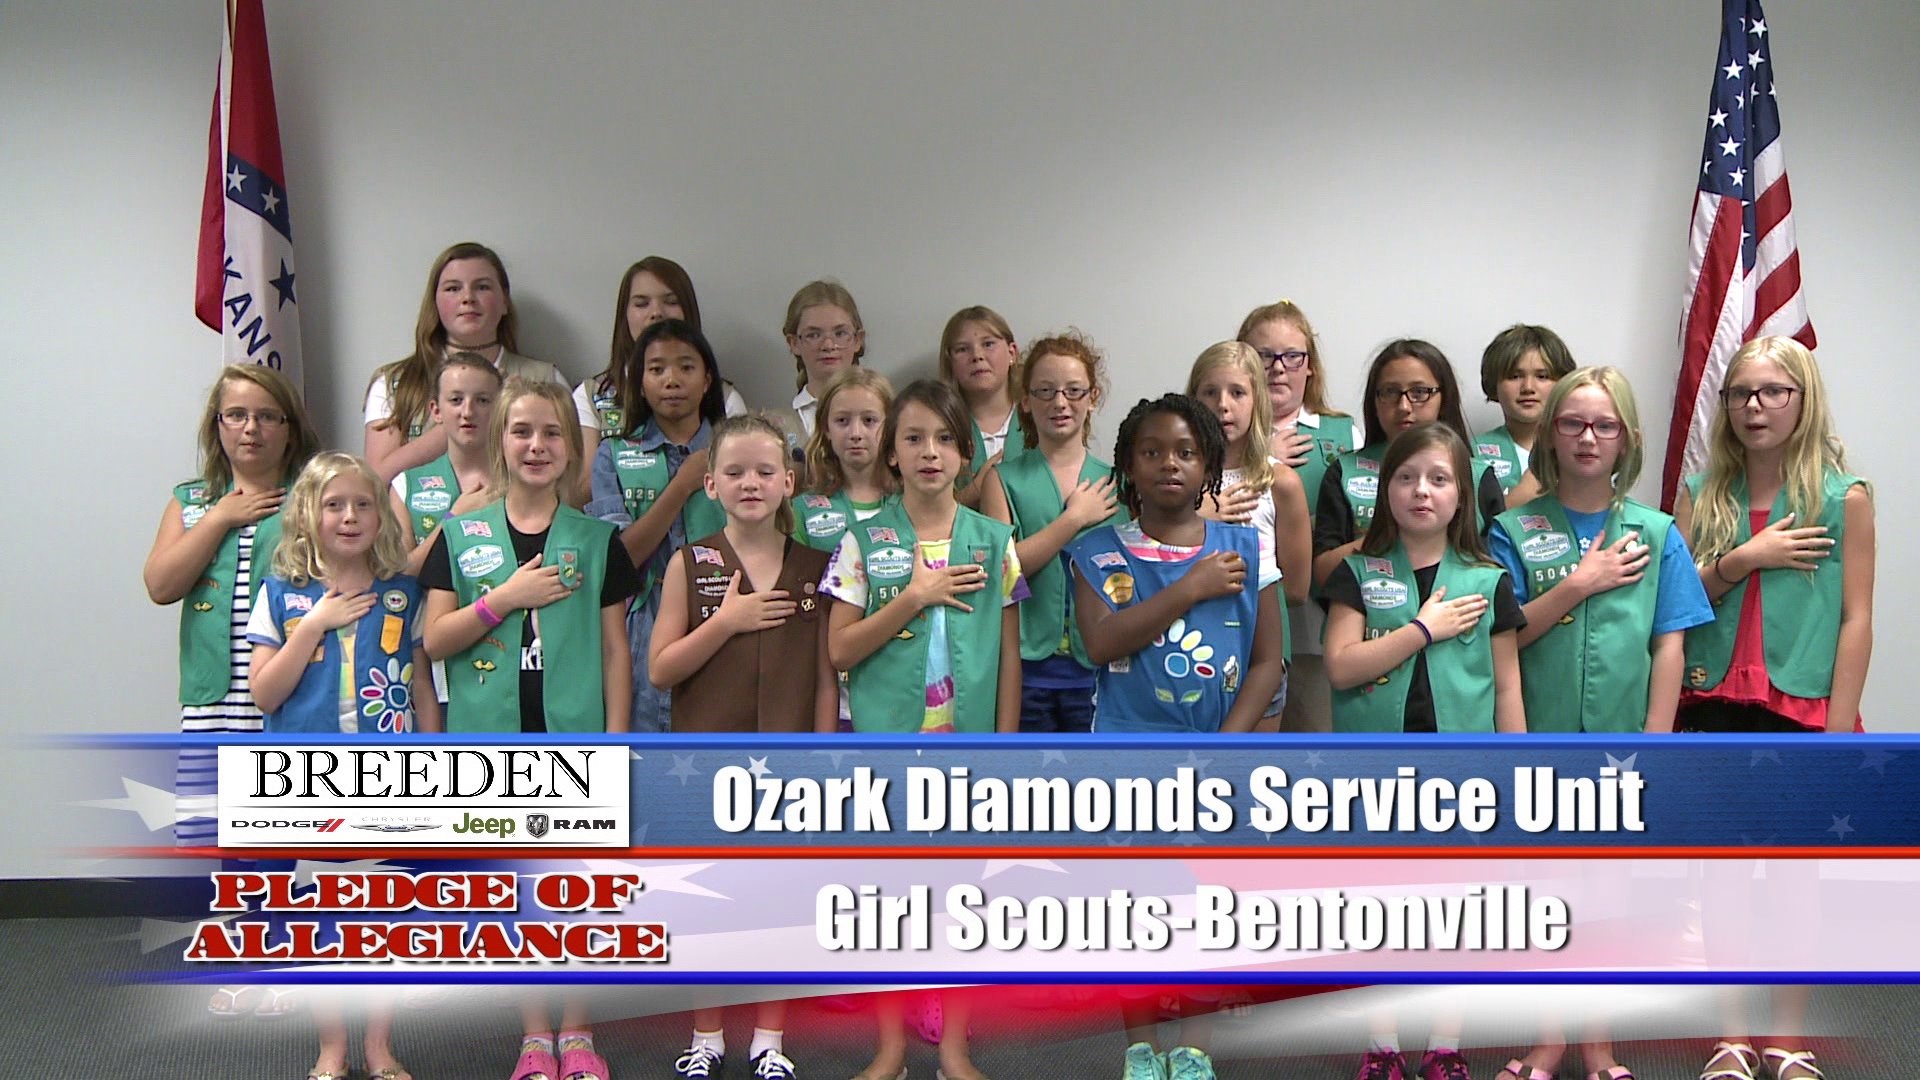 Ozark Diamonds Service Unit  Girl Scouts  Bentonville